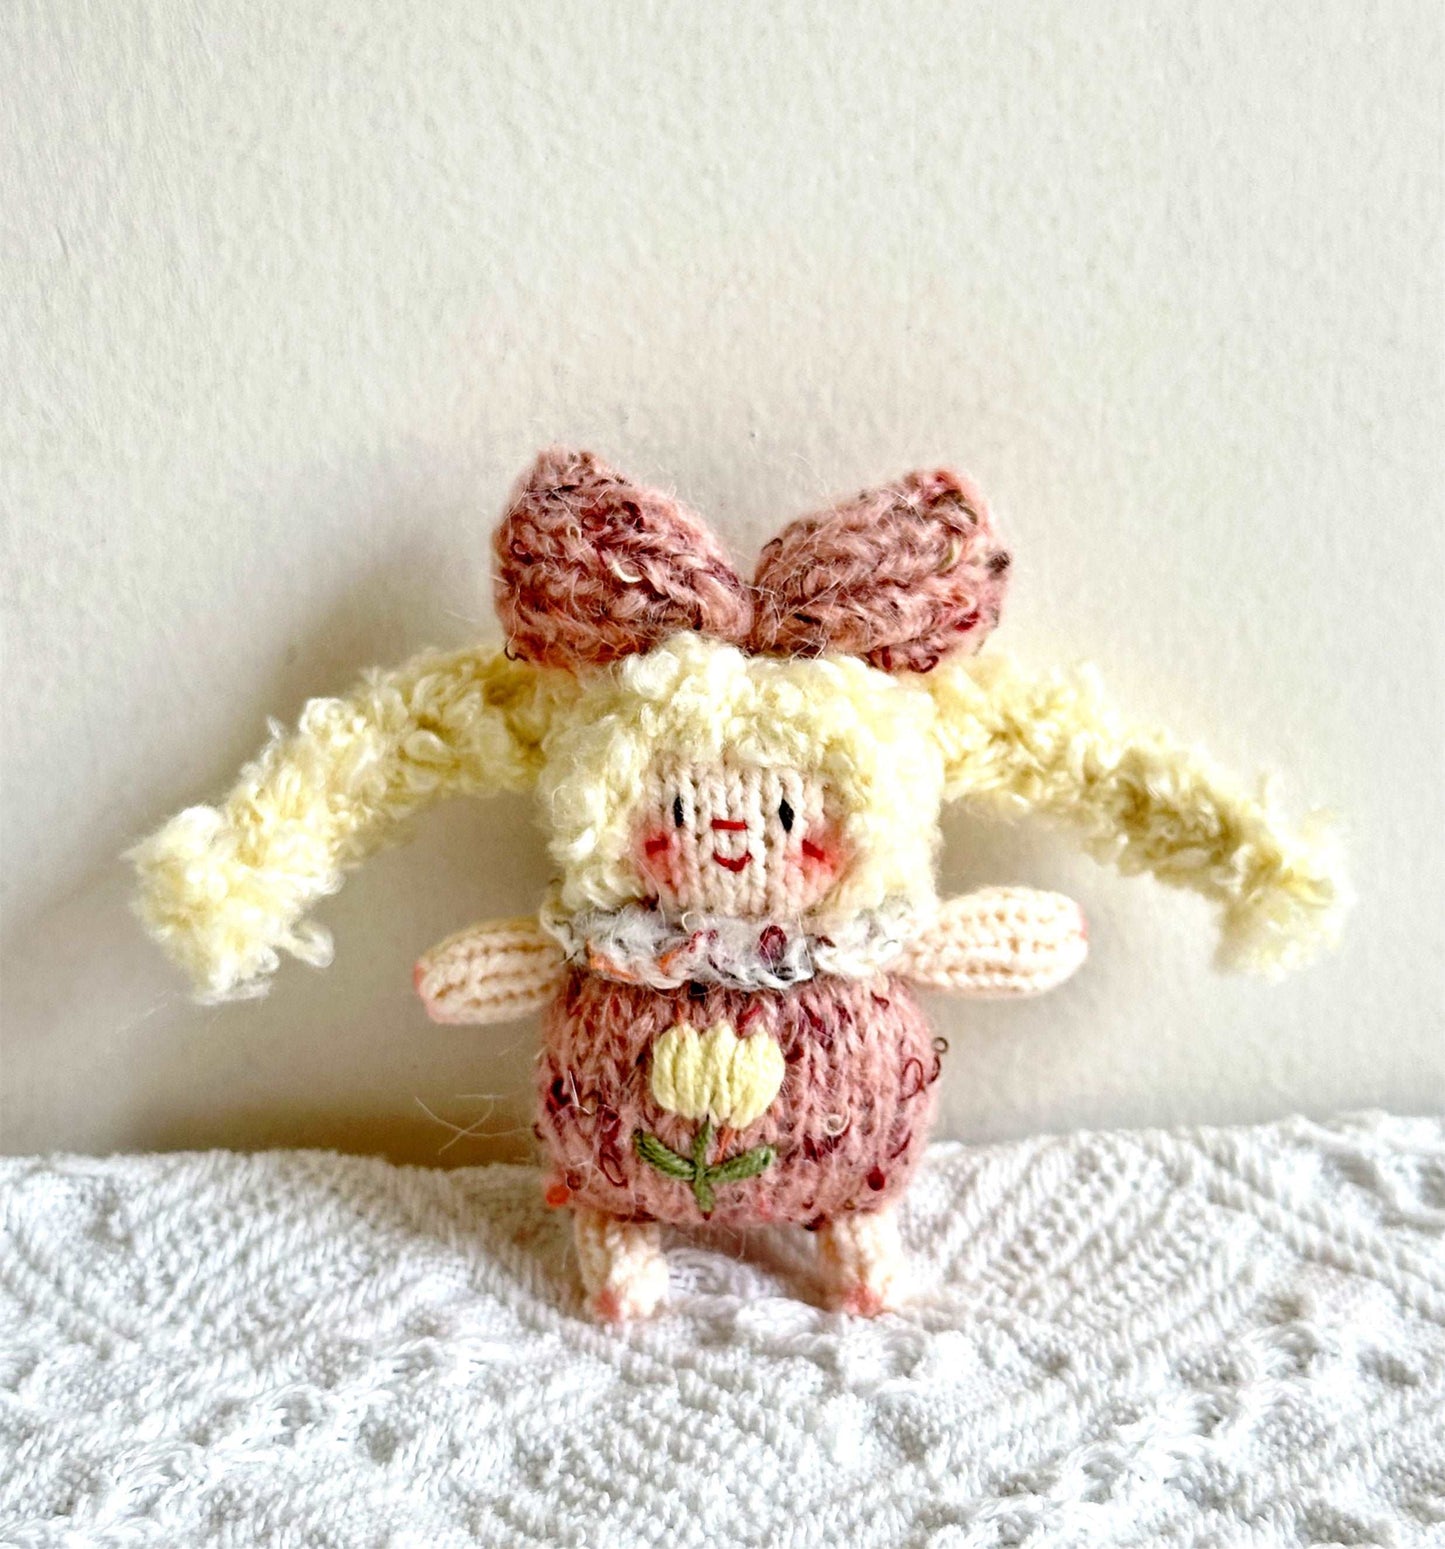 Delightful Crochet Girl Doll Ornament for Display